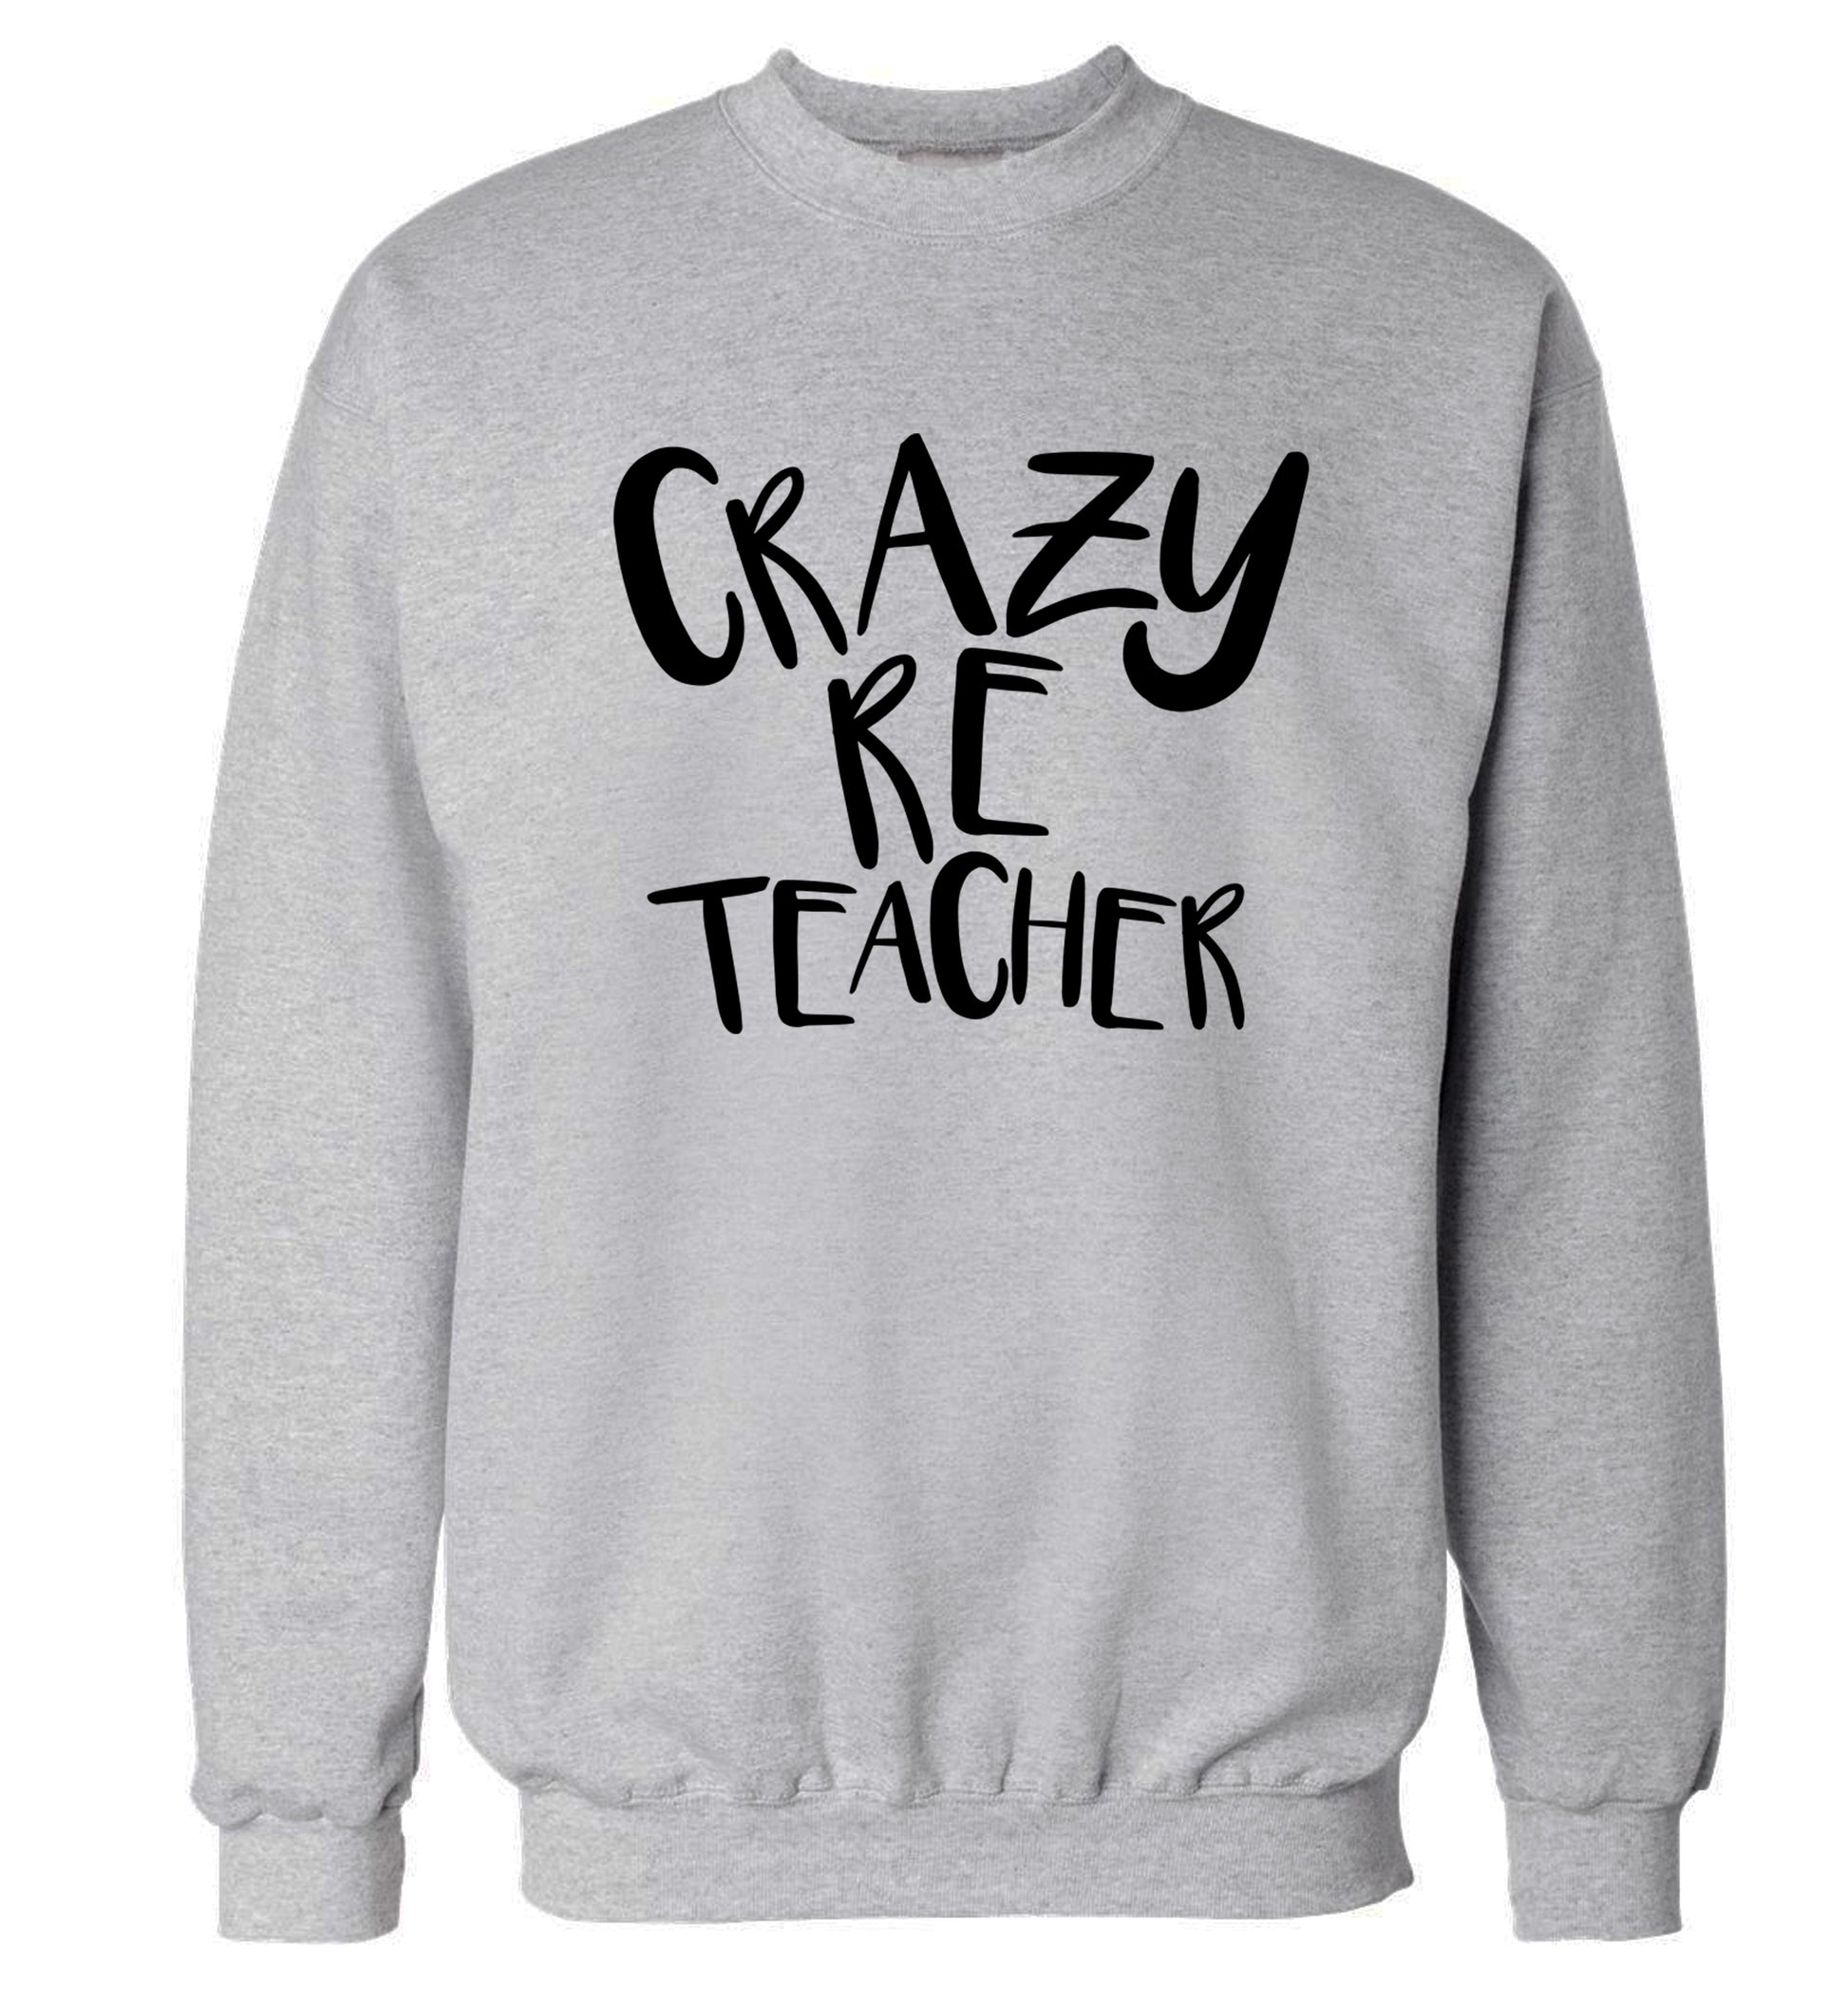 Crazy RE teacher Adult's unisex grey Sweater 2XL